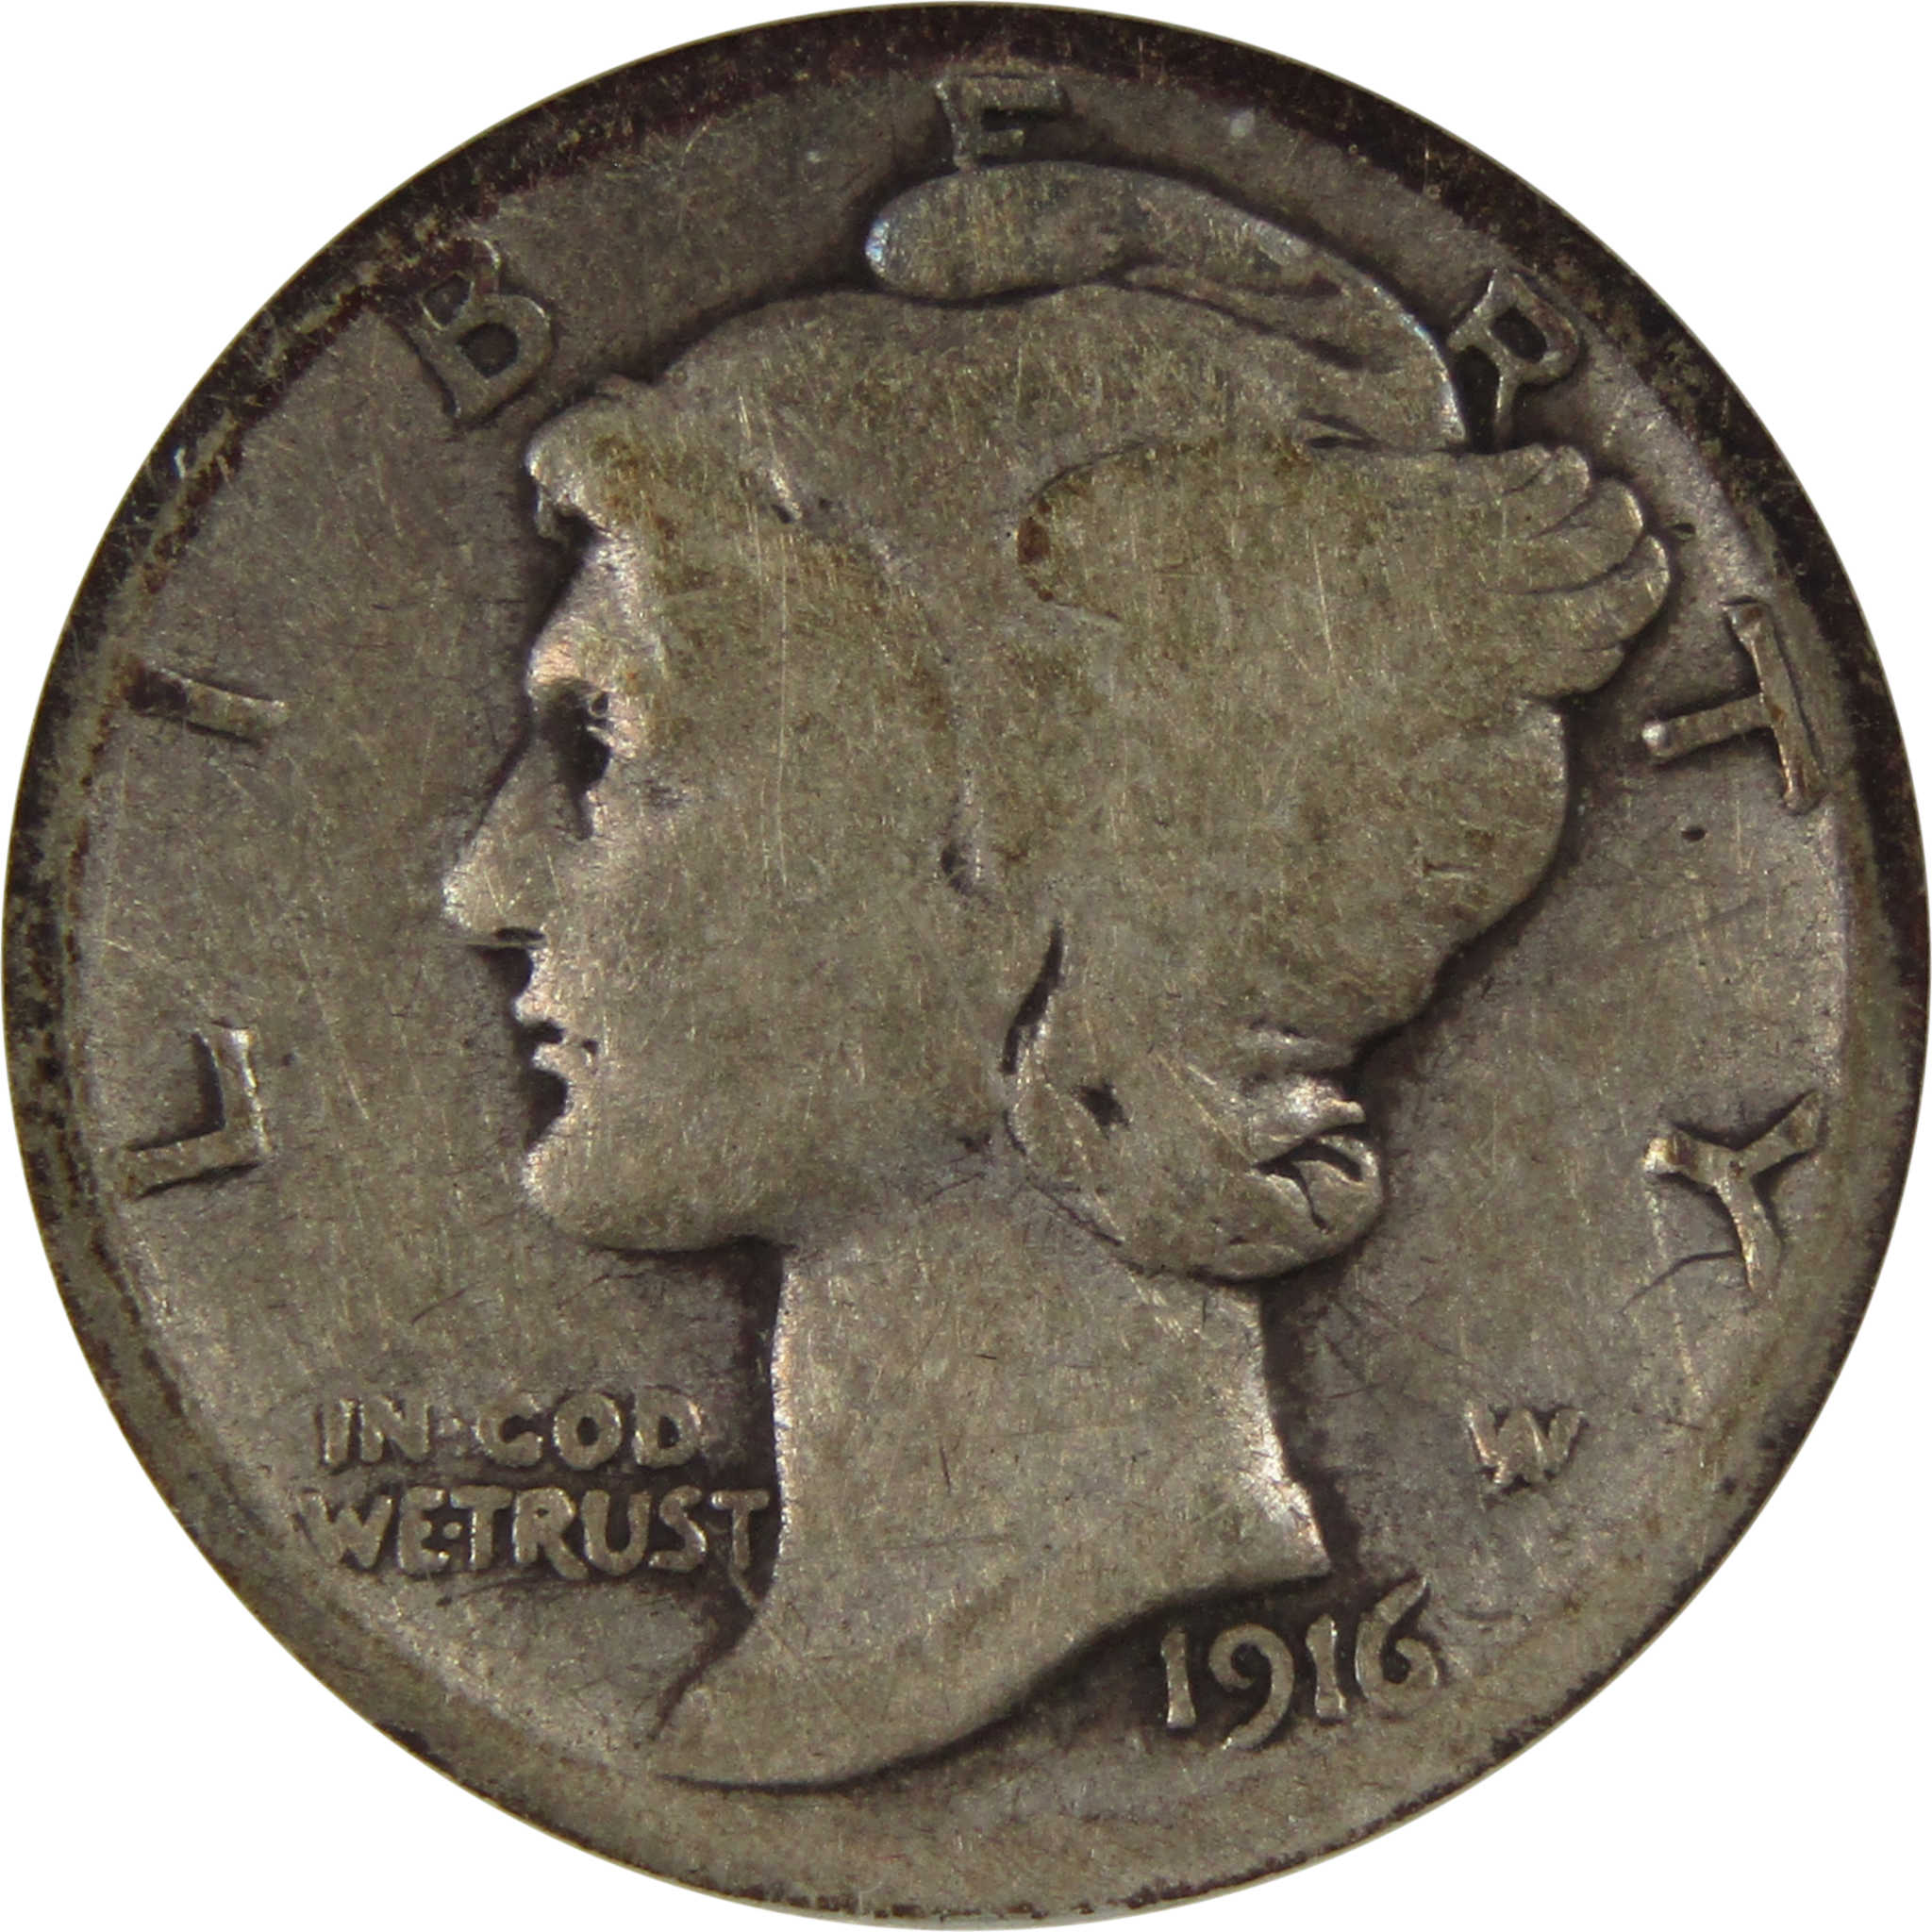 1916 D Mercury Dime G 6 ANACS 90% Silver 10c US Coin SKU:I3844